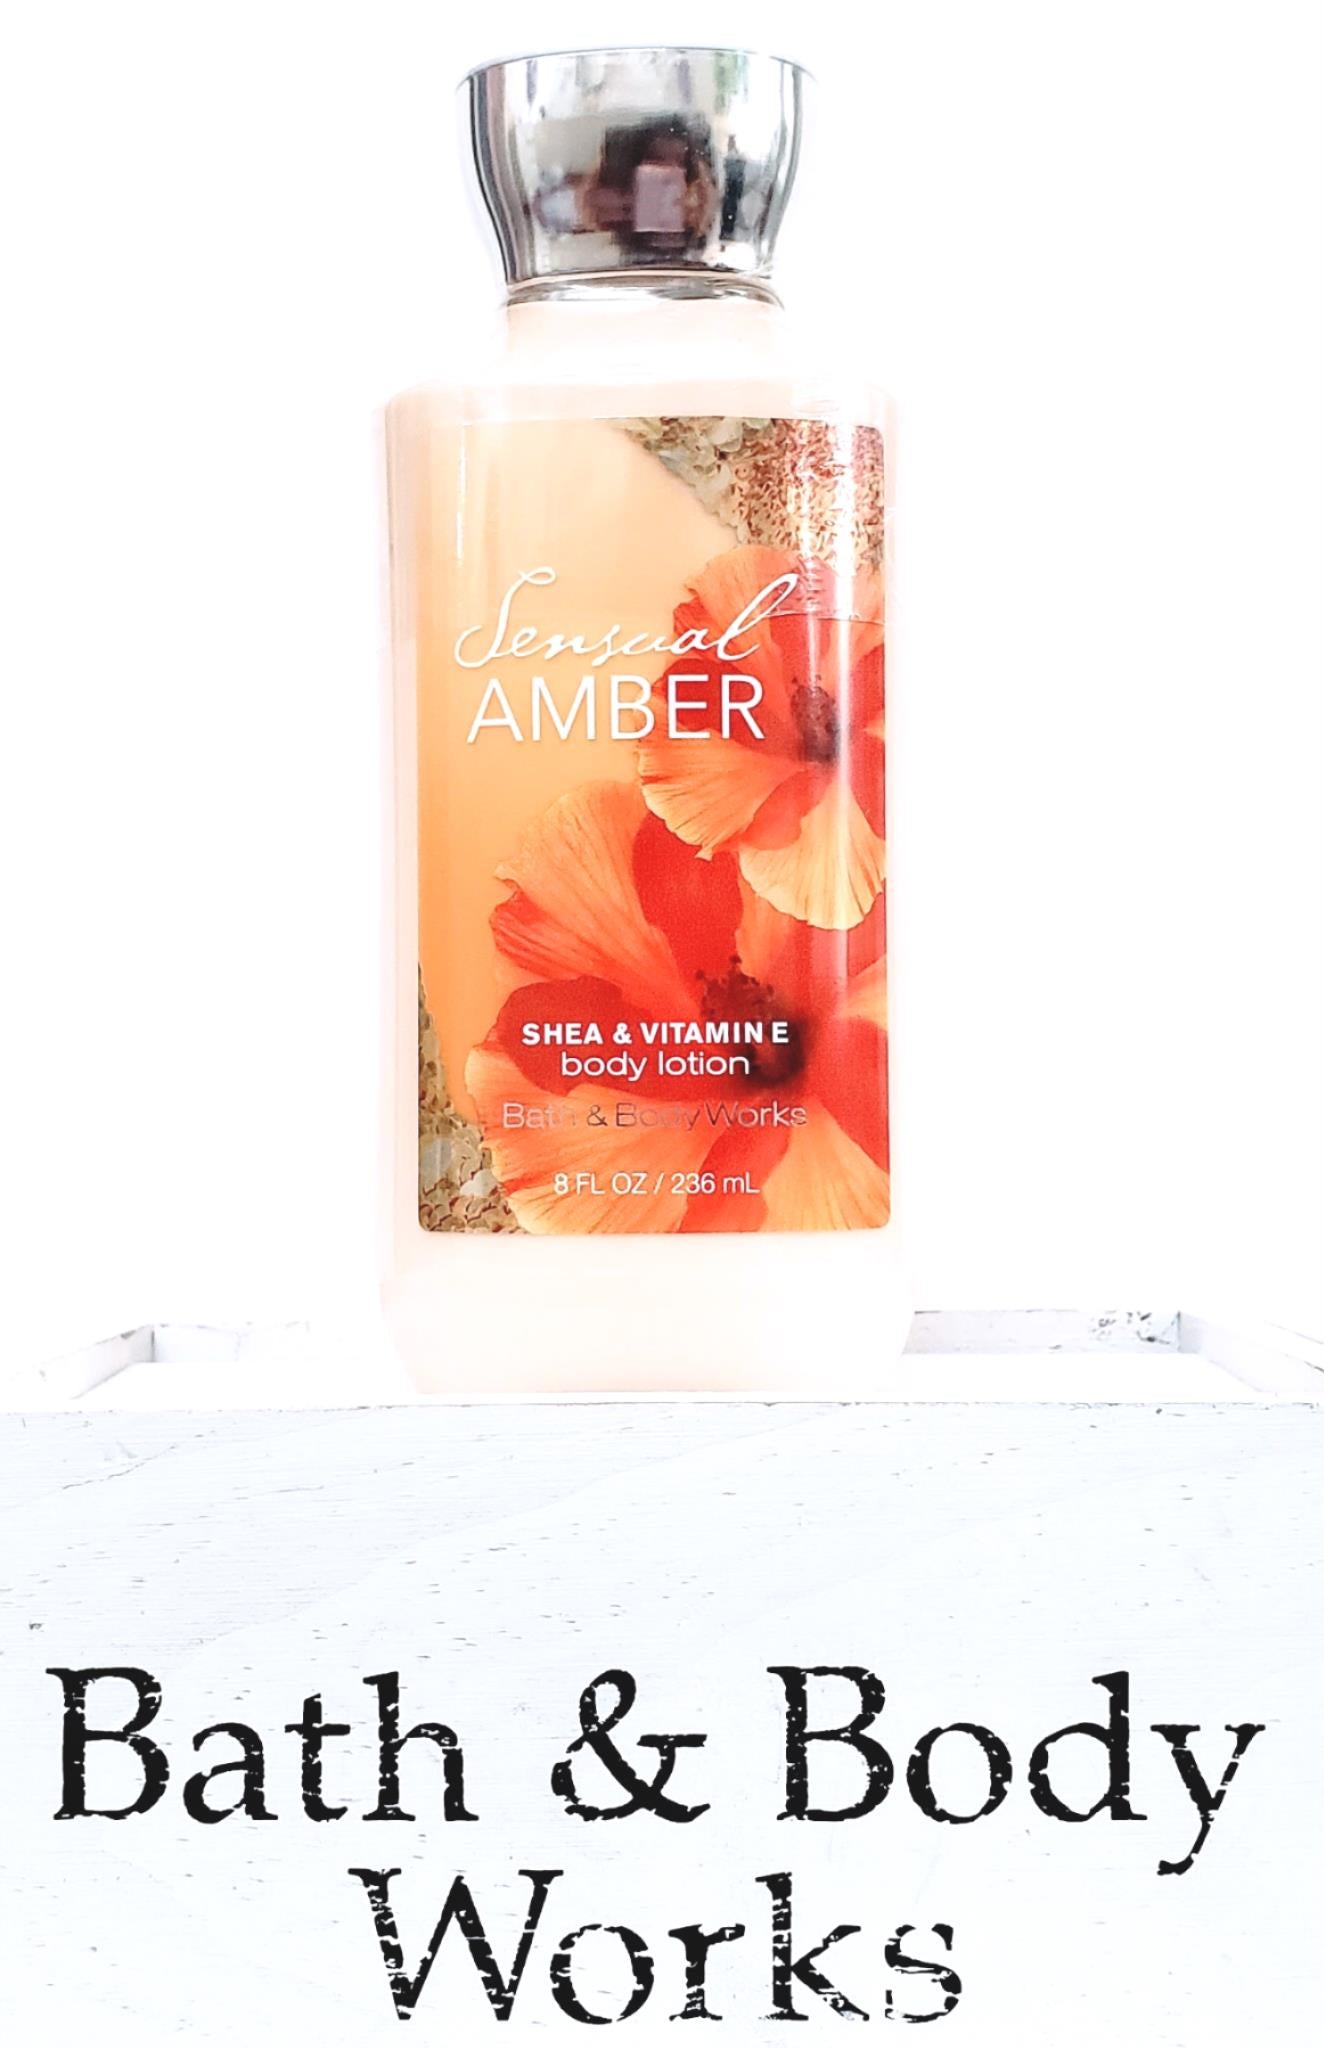 Sensual Amber Wallflowers Fragrance Refill